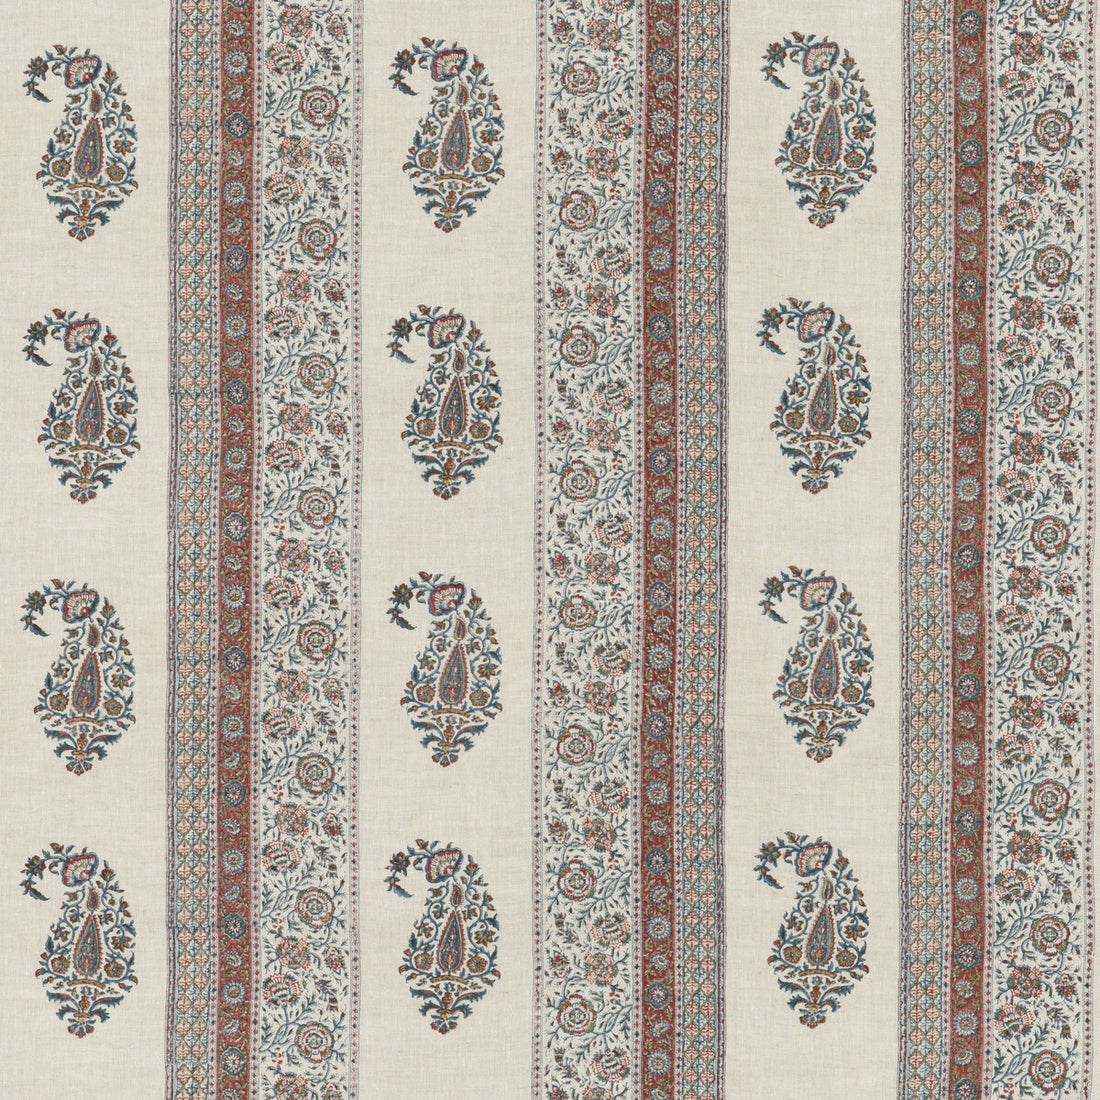 Portobello fabric in red/blue color - pattern BP10915.2.0 - by G P &amp; J Baker in the Portobello collection